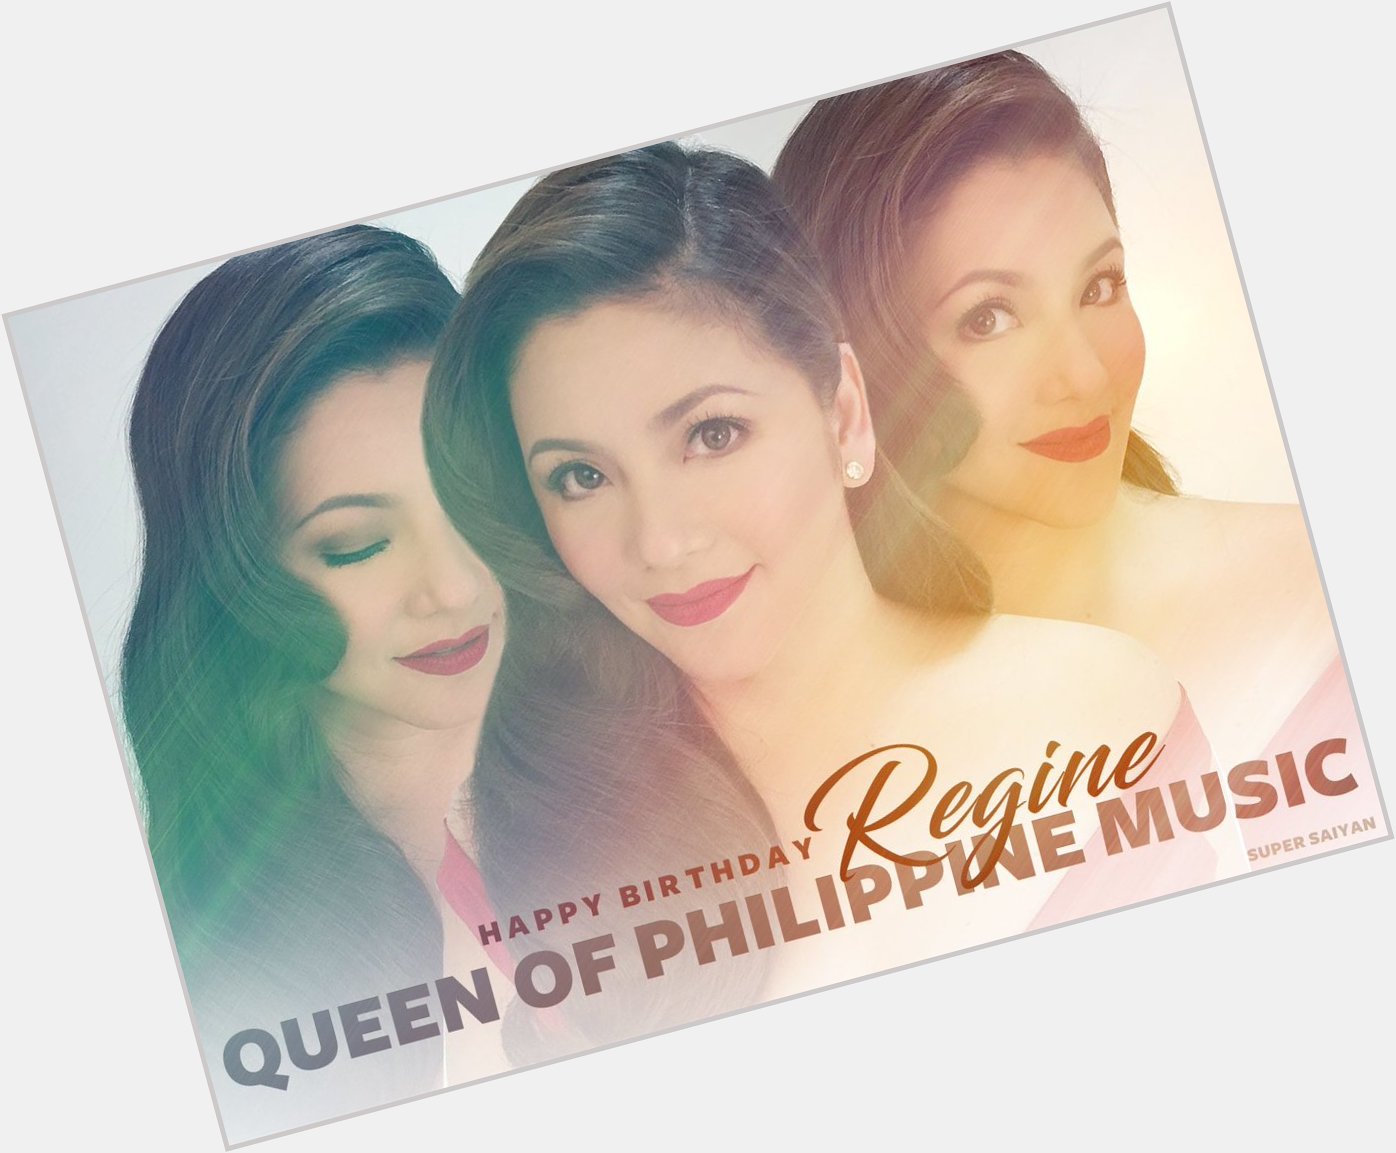 Happy birthday to the QUEEN of PHILIPPINE MUSIC Regine Velasquez

HappyBirthday QueenRegine 